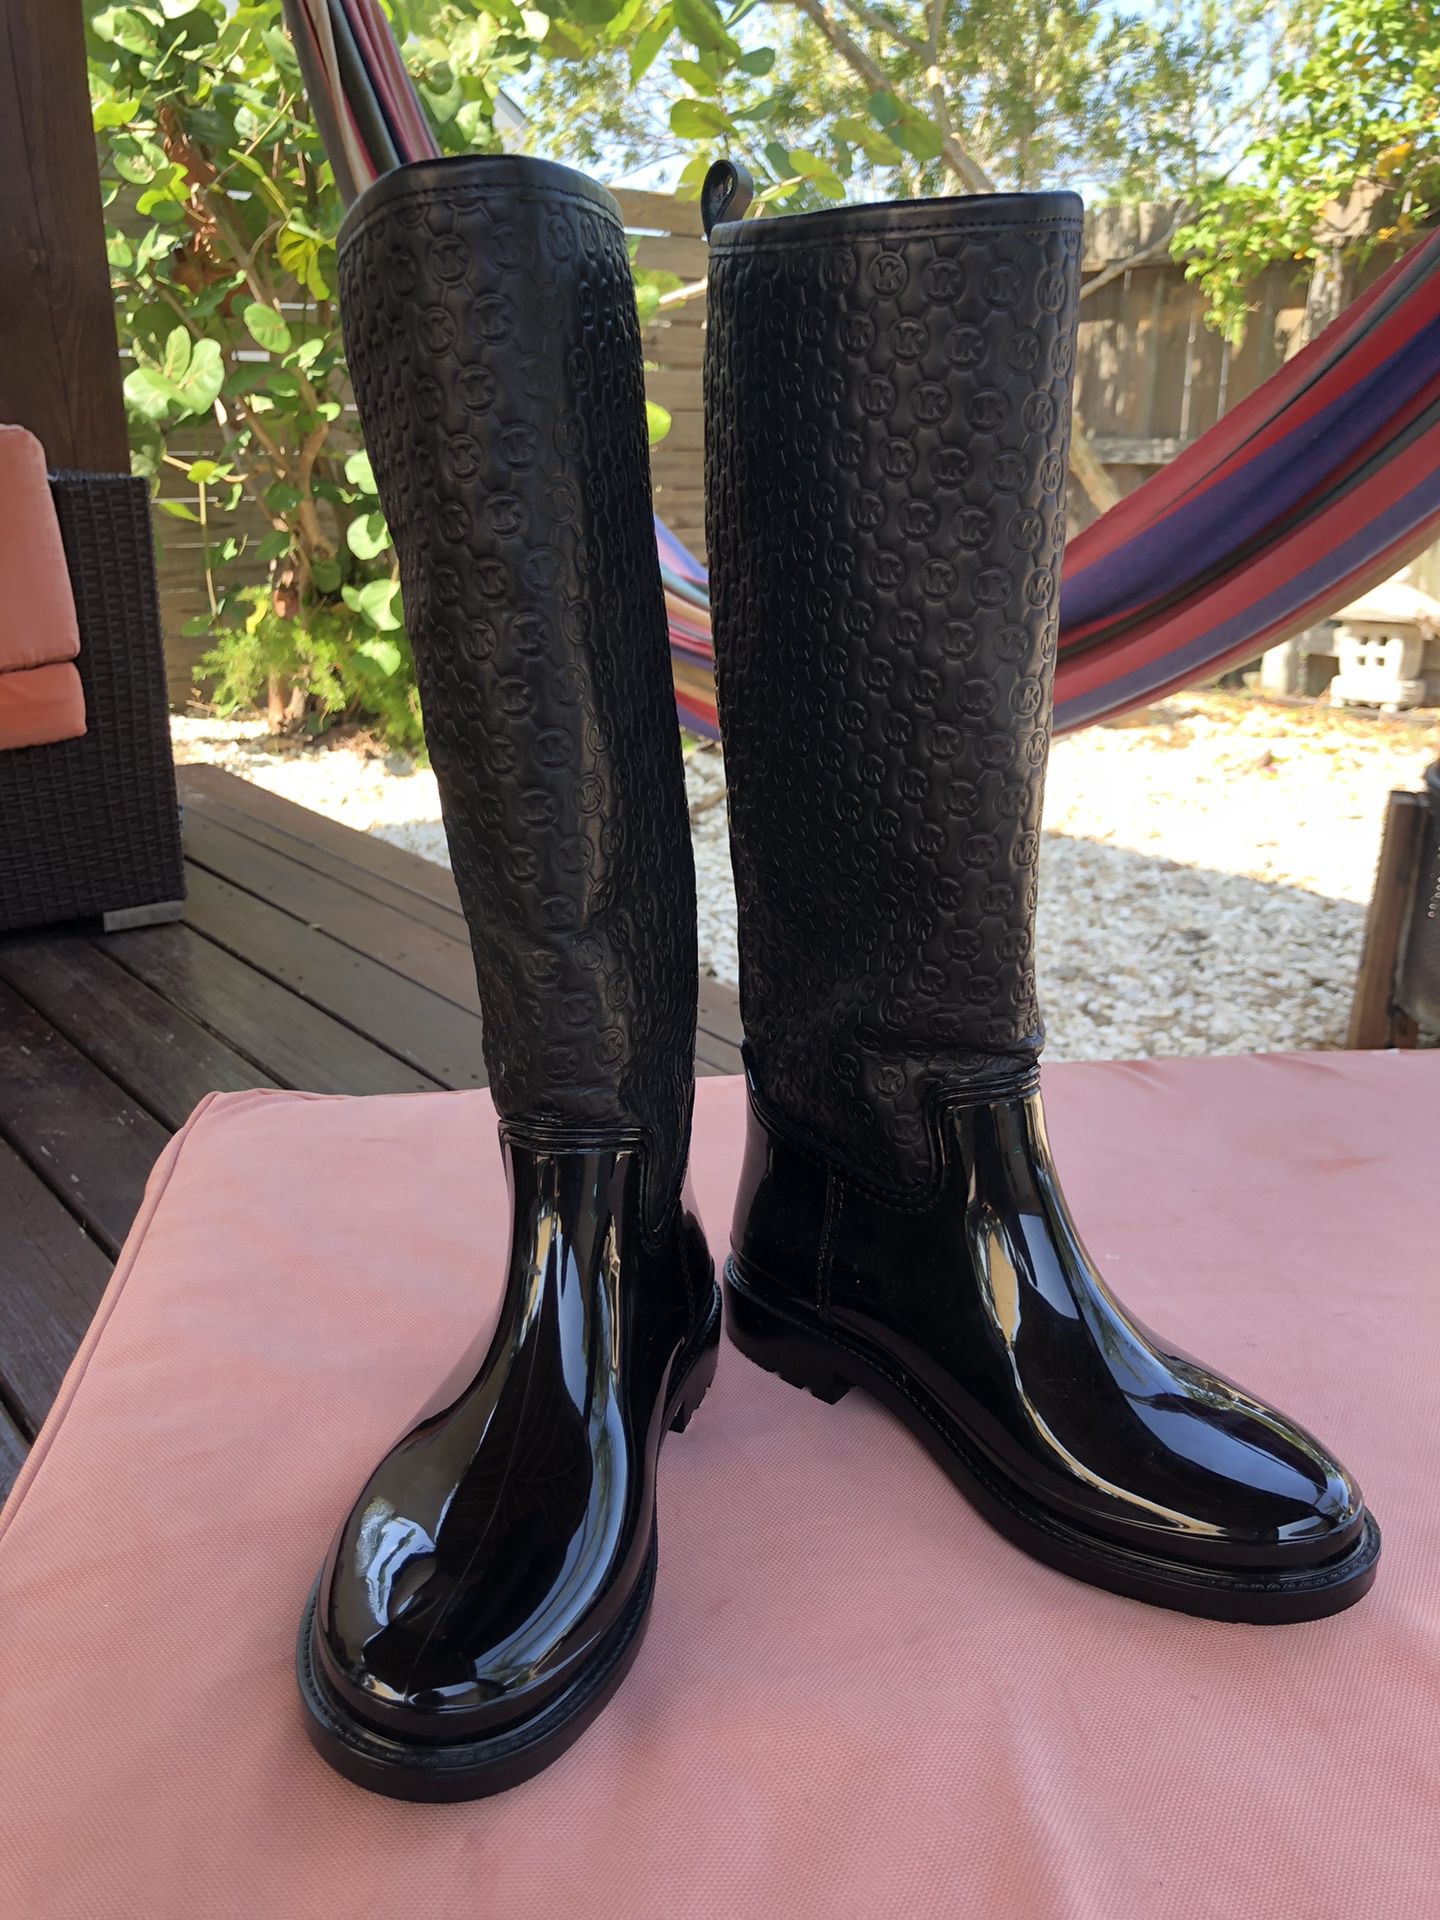 Michael Kors rain boots - Never worn